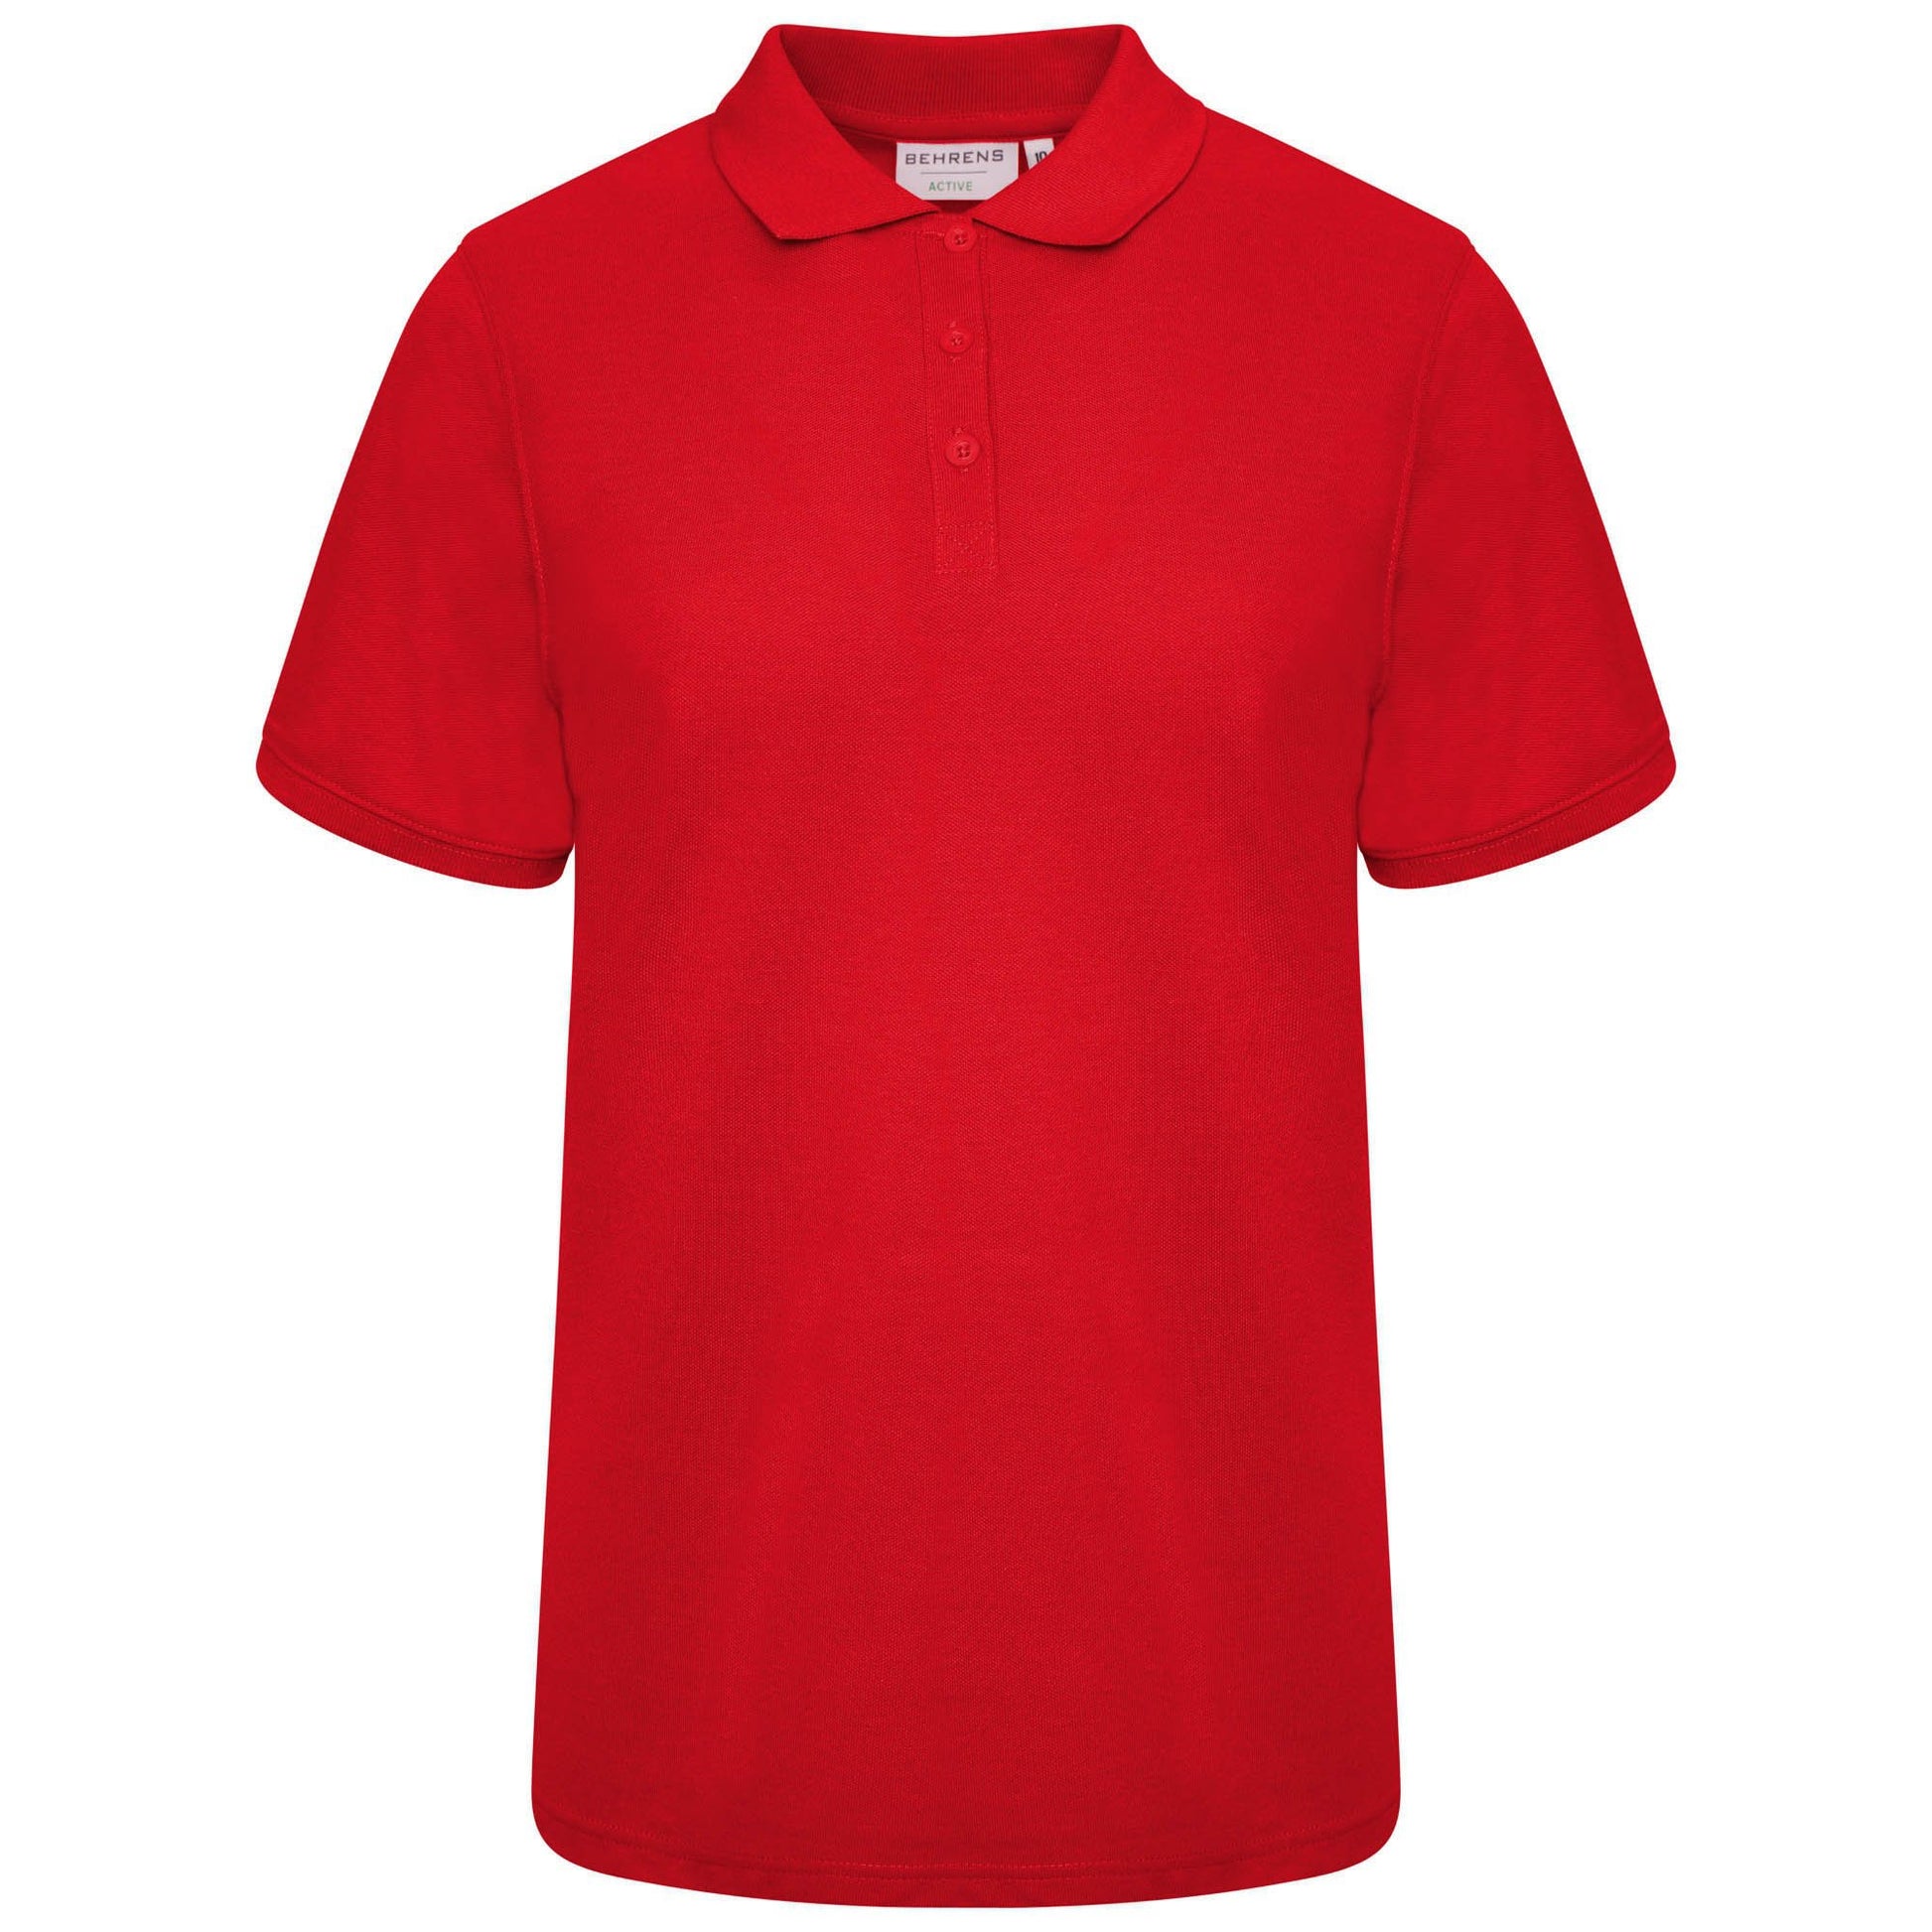 Behrens Ladies Pique Polo Shirt - BEH-4469L - Red - UK 8